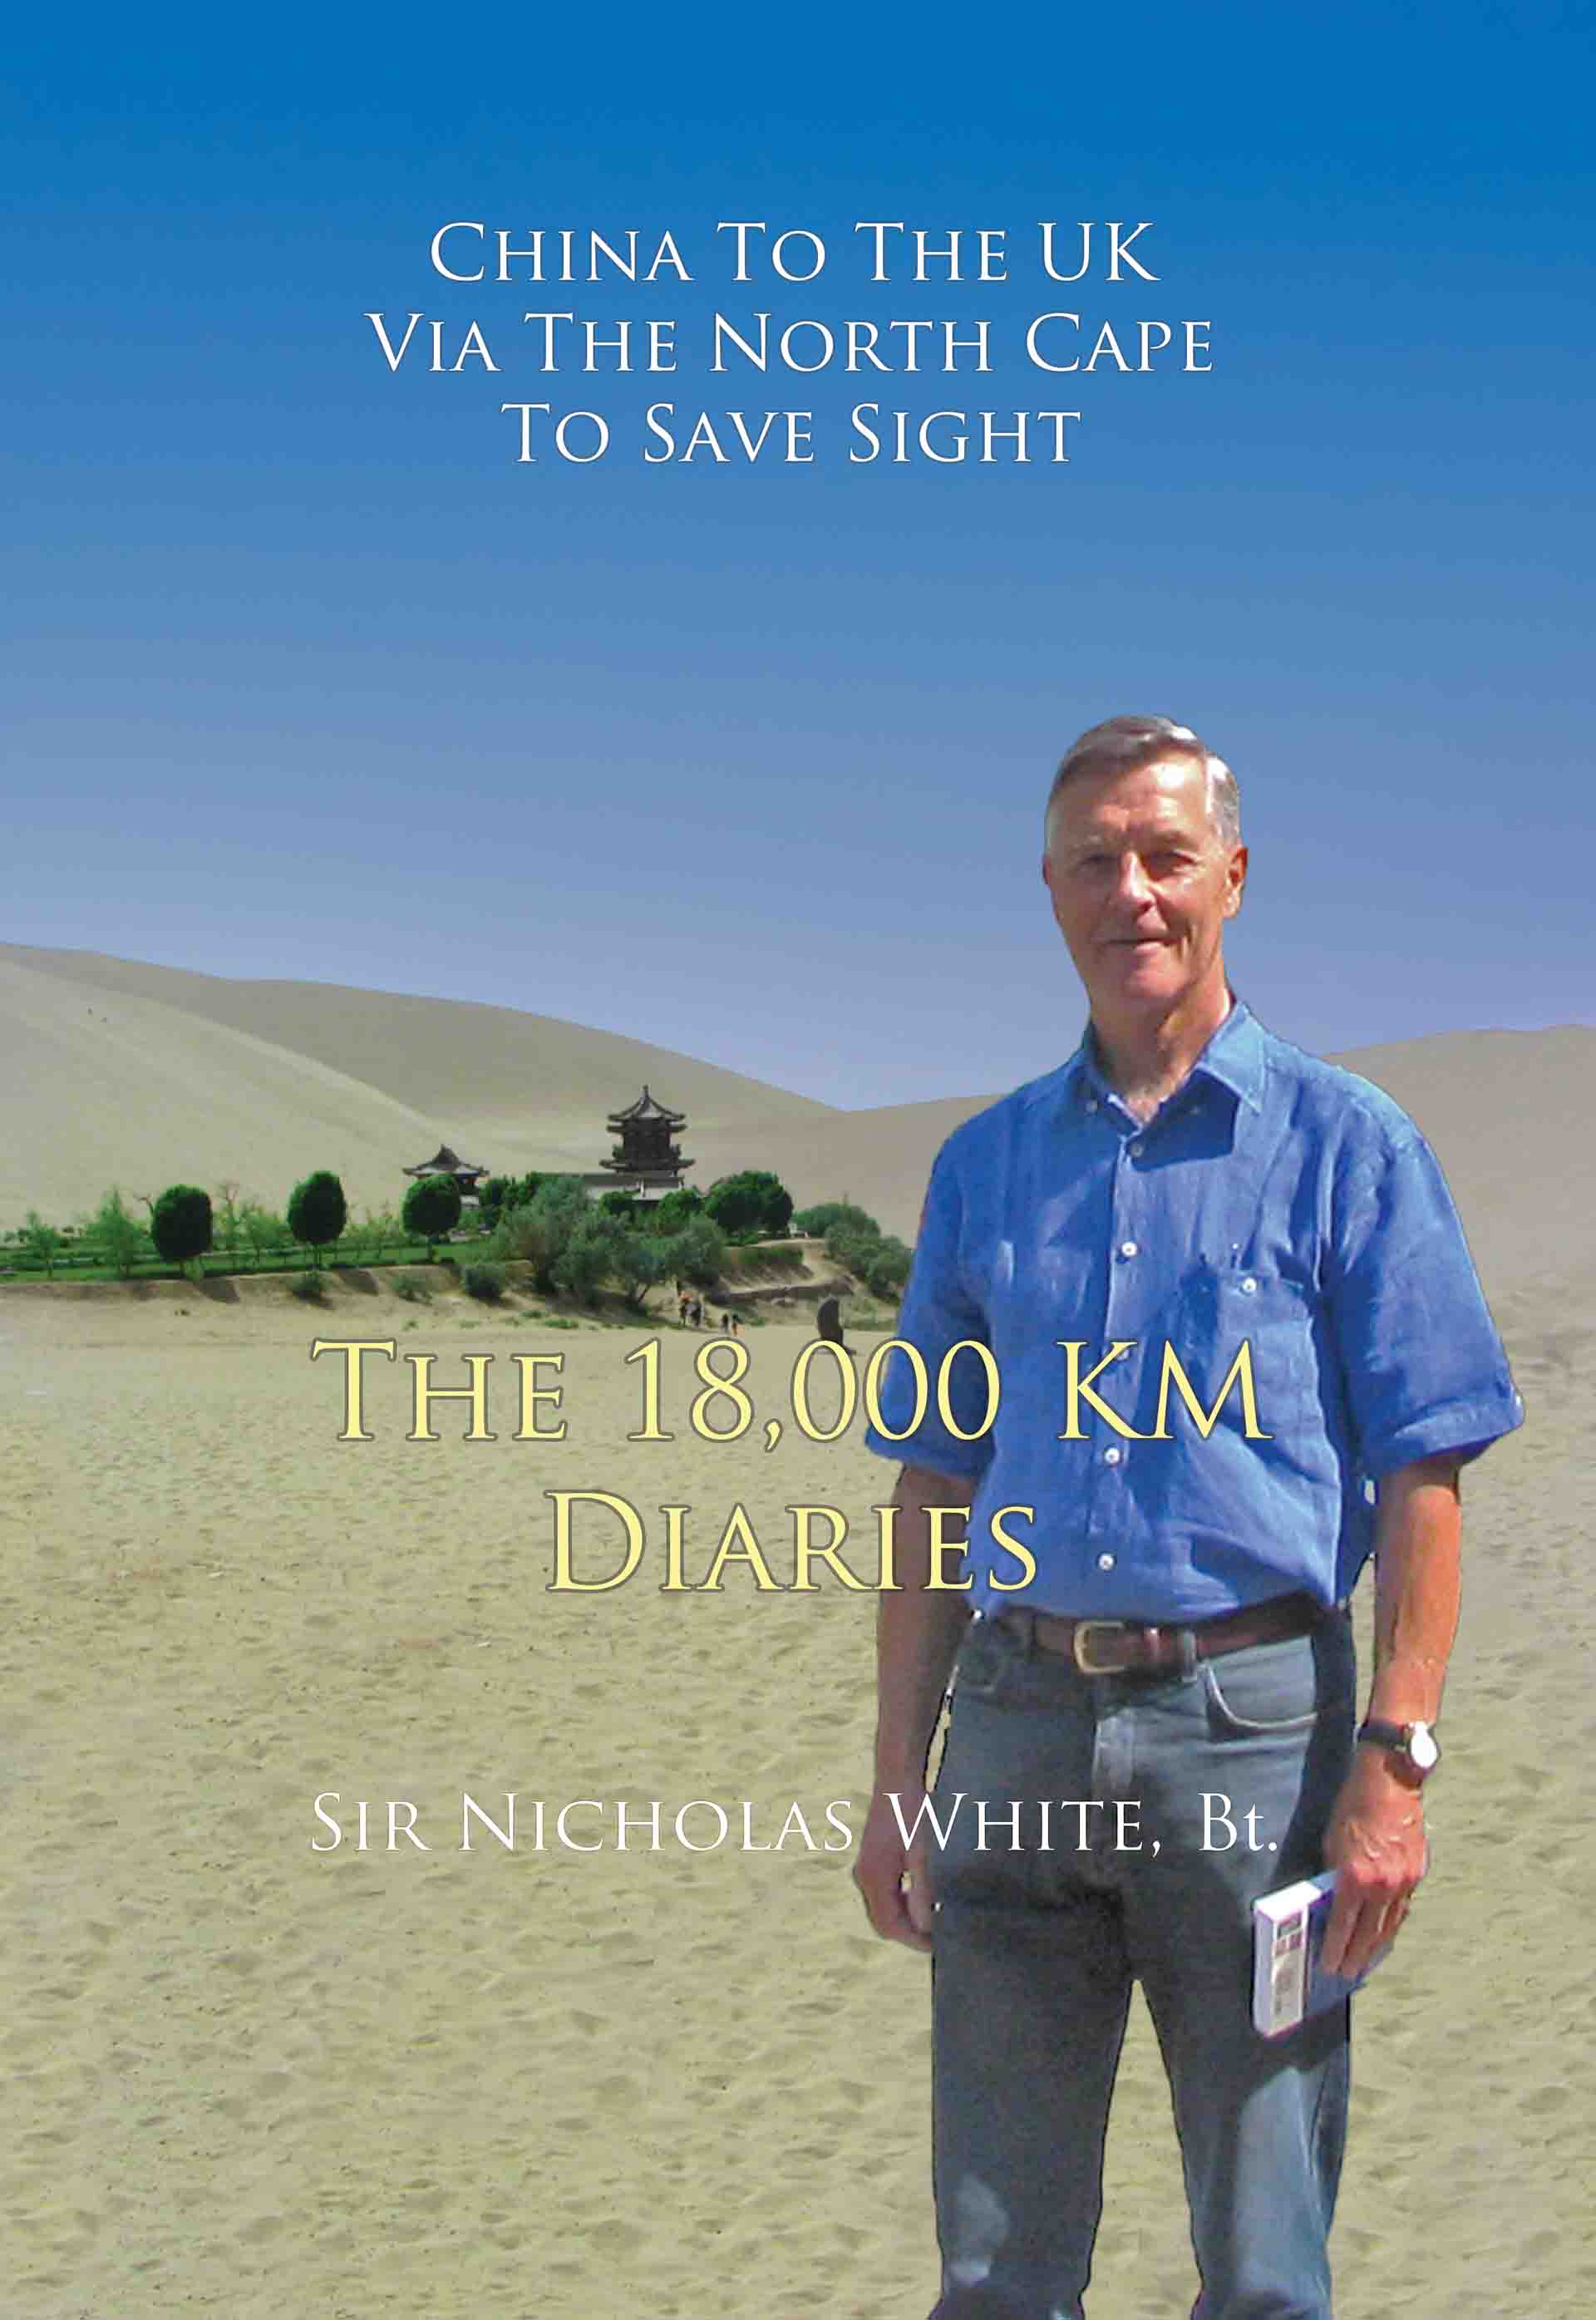 The 18,000 KM Diaries by Sir Nicholas White, Bt.